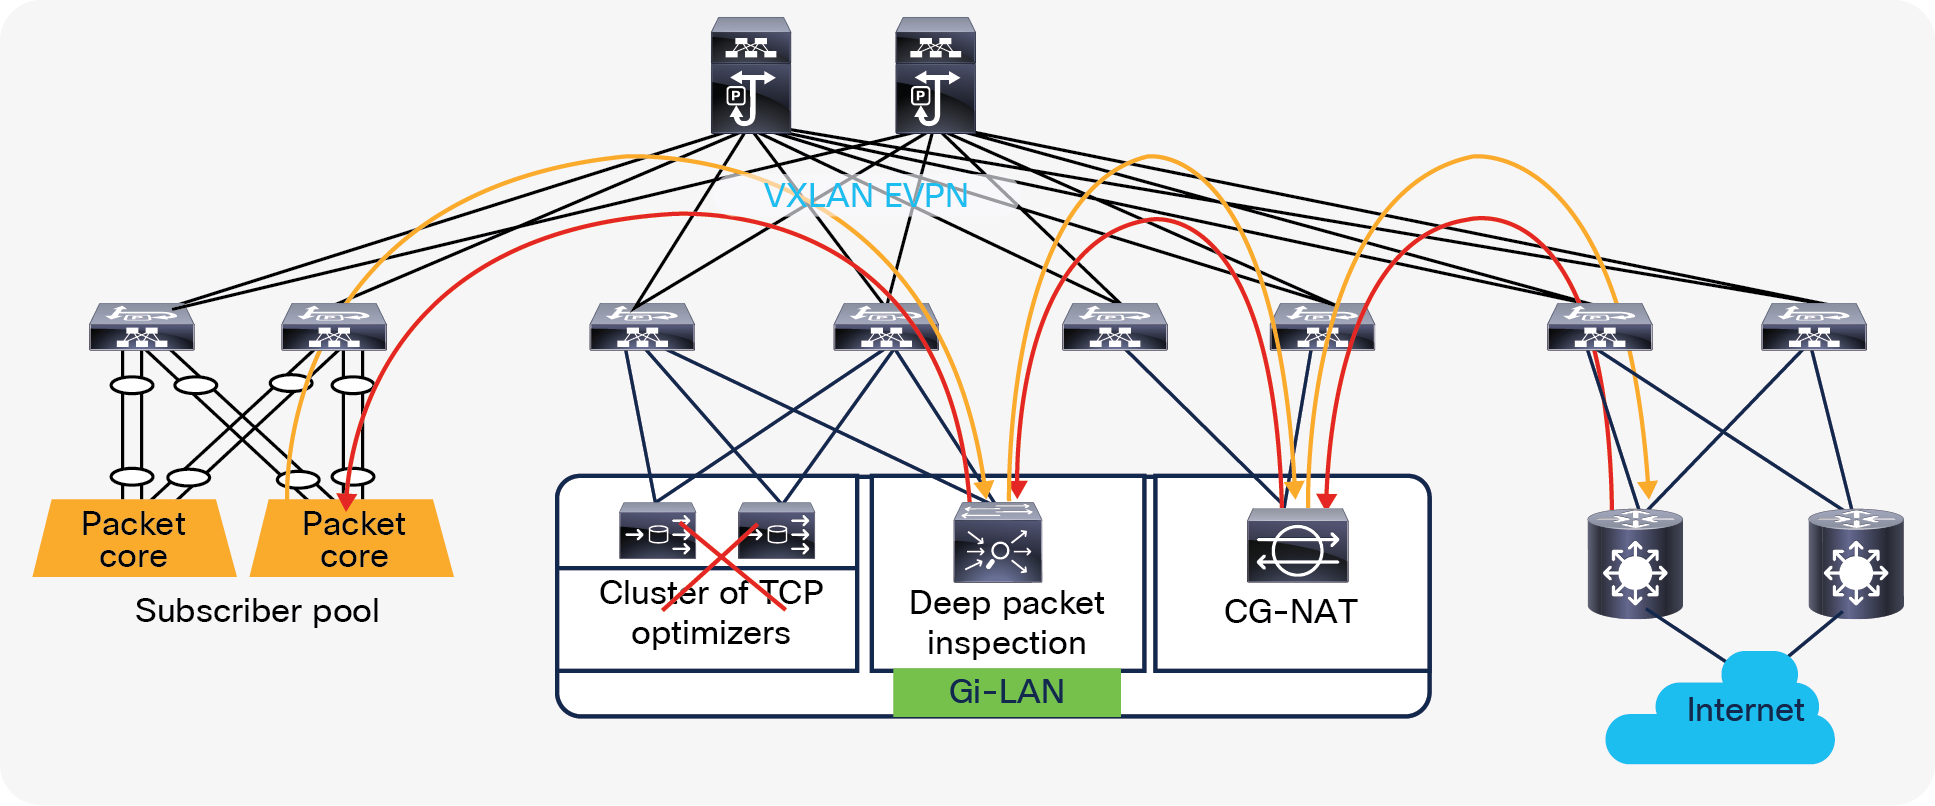 ePBR bypass service node capability